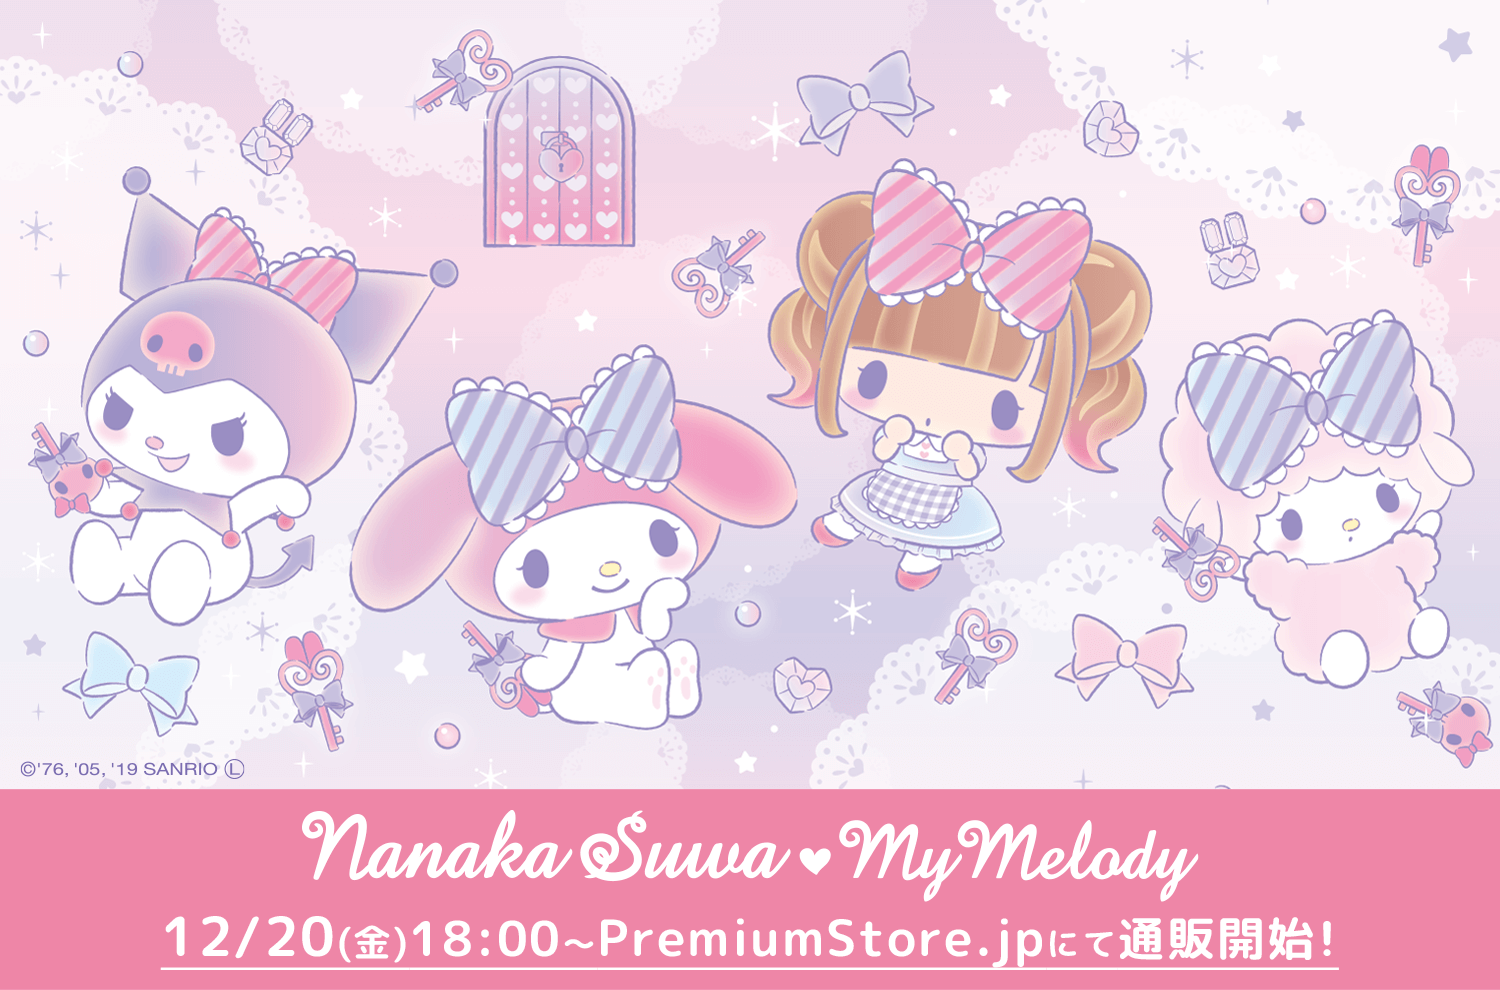 『Nanaka Suwa♡My Melody PremiumShop』にて販売をしていたオリジナル商品の通販が決定！